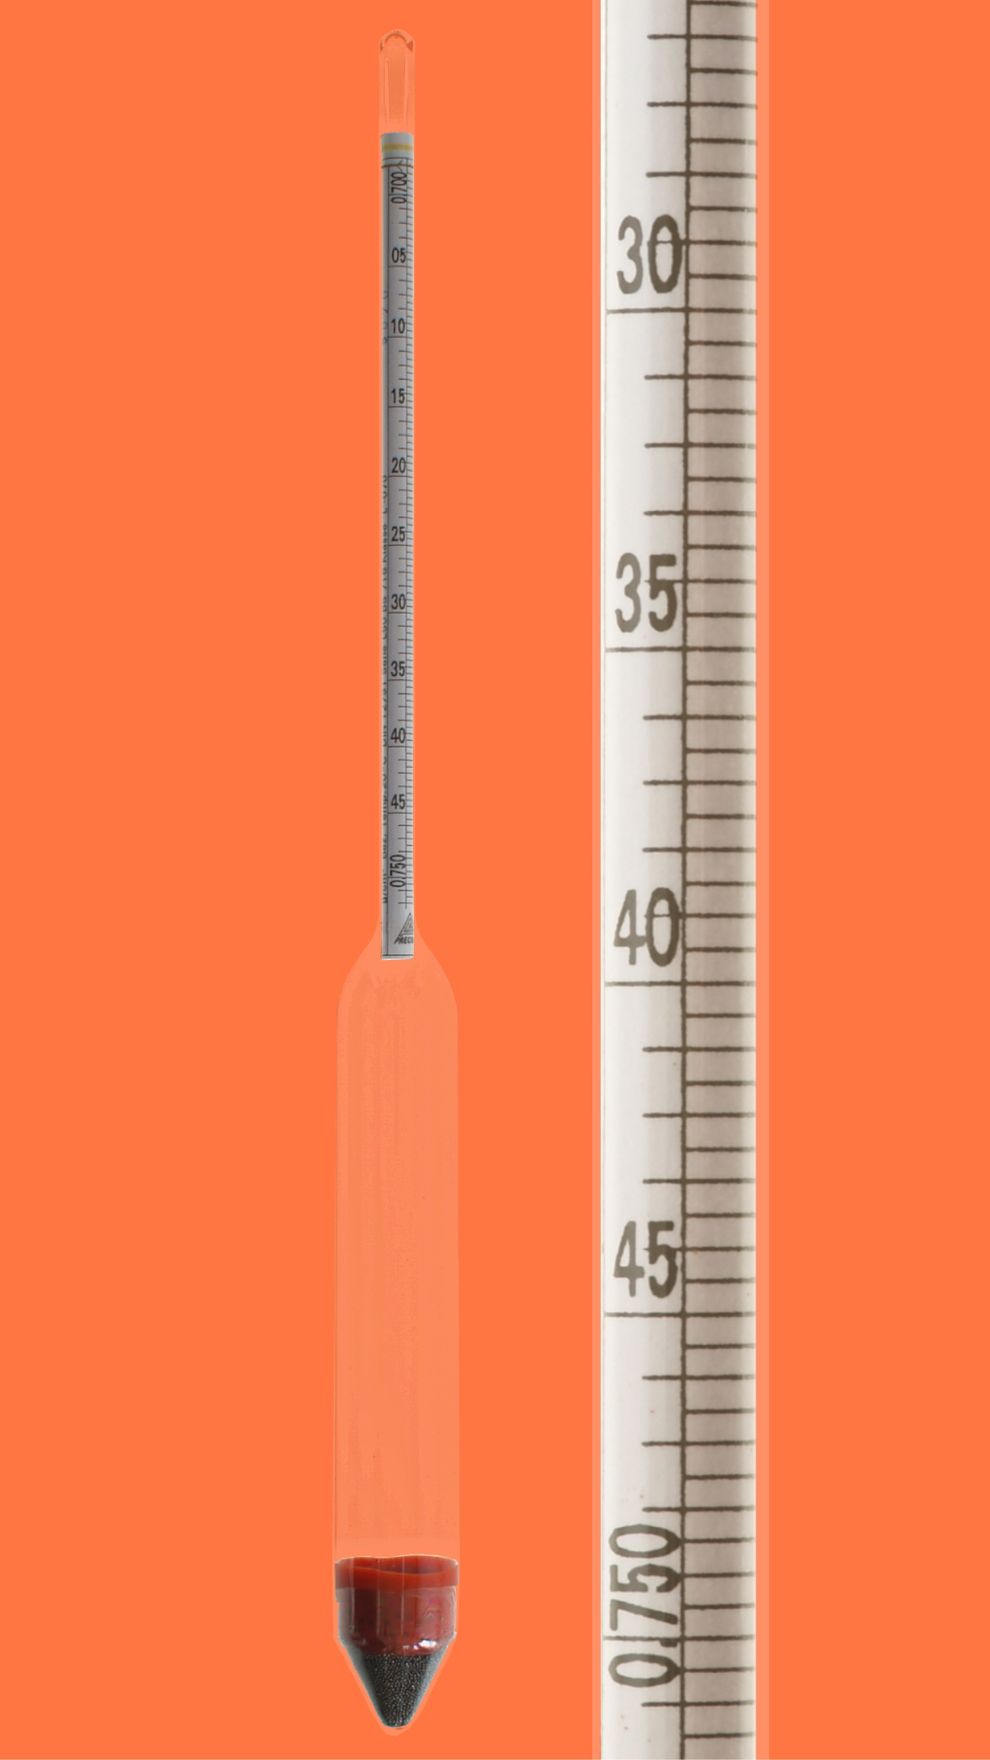 Aräometer, DIN 12791, L50, 0,70-0,75:0,0005g/cm³, Bezugstemp. 20°C, ohne Thermometer